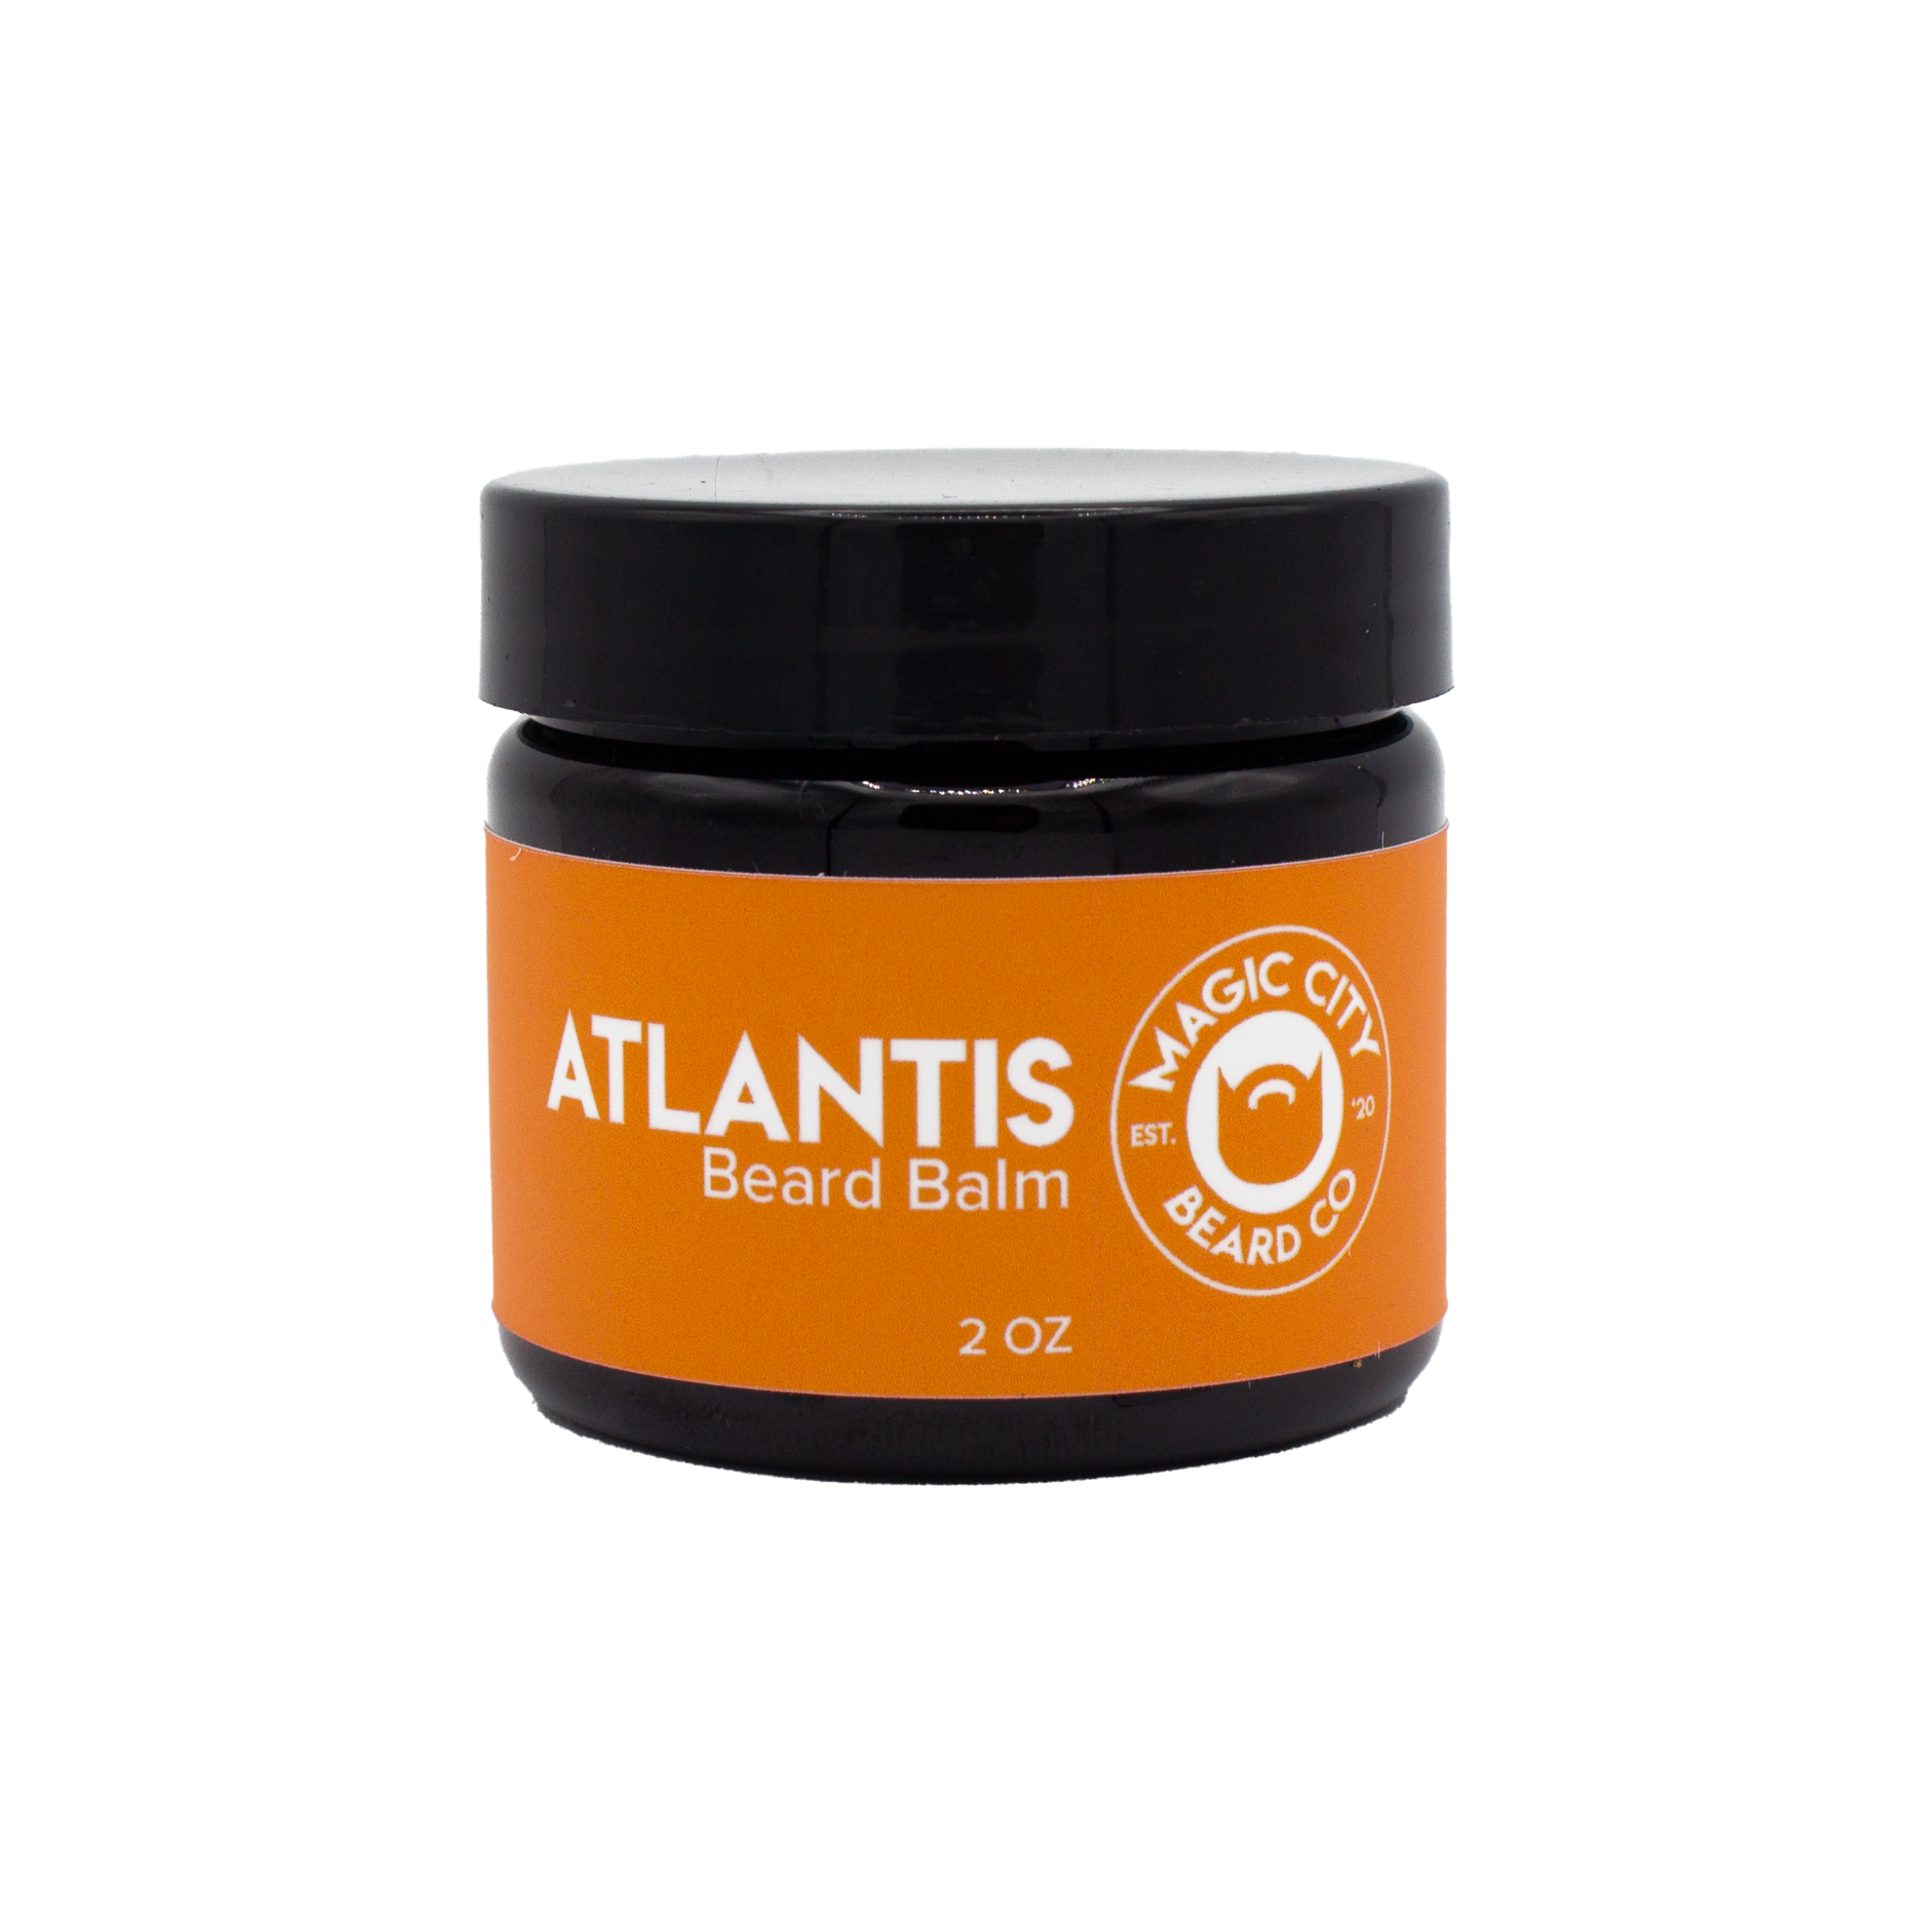 Atlantis Beard Balm